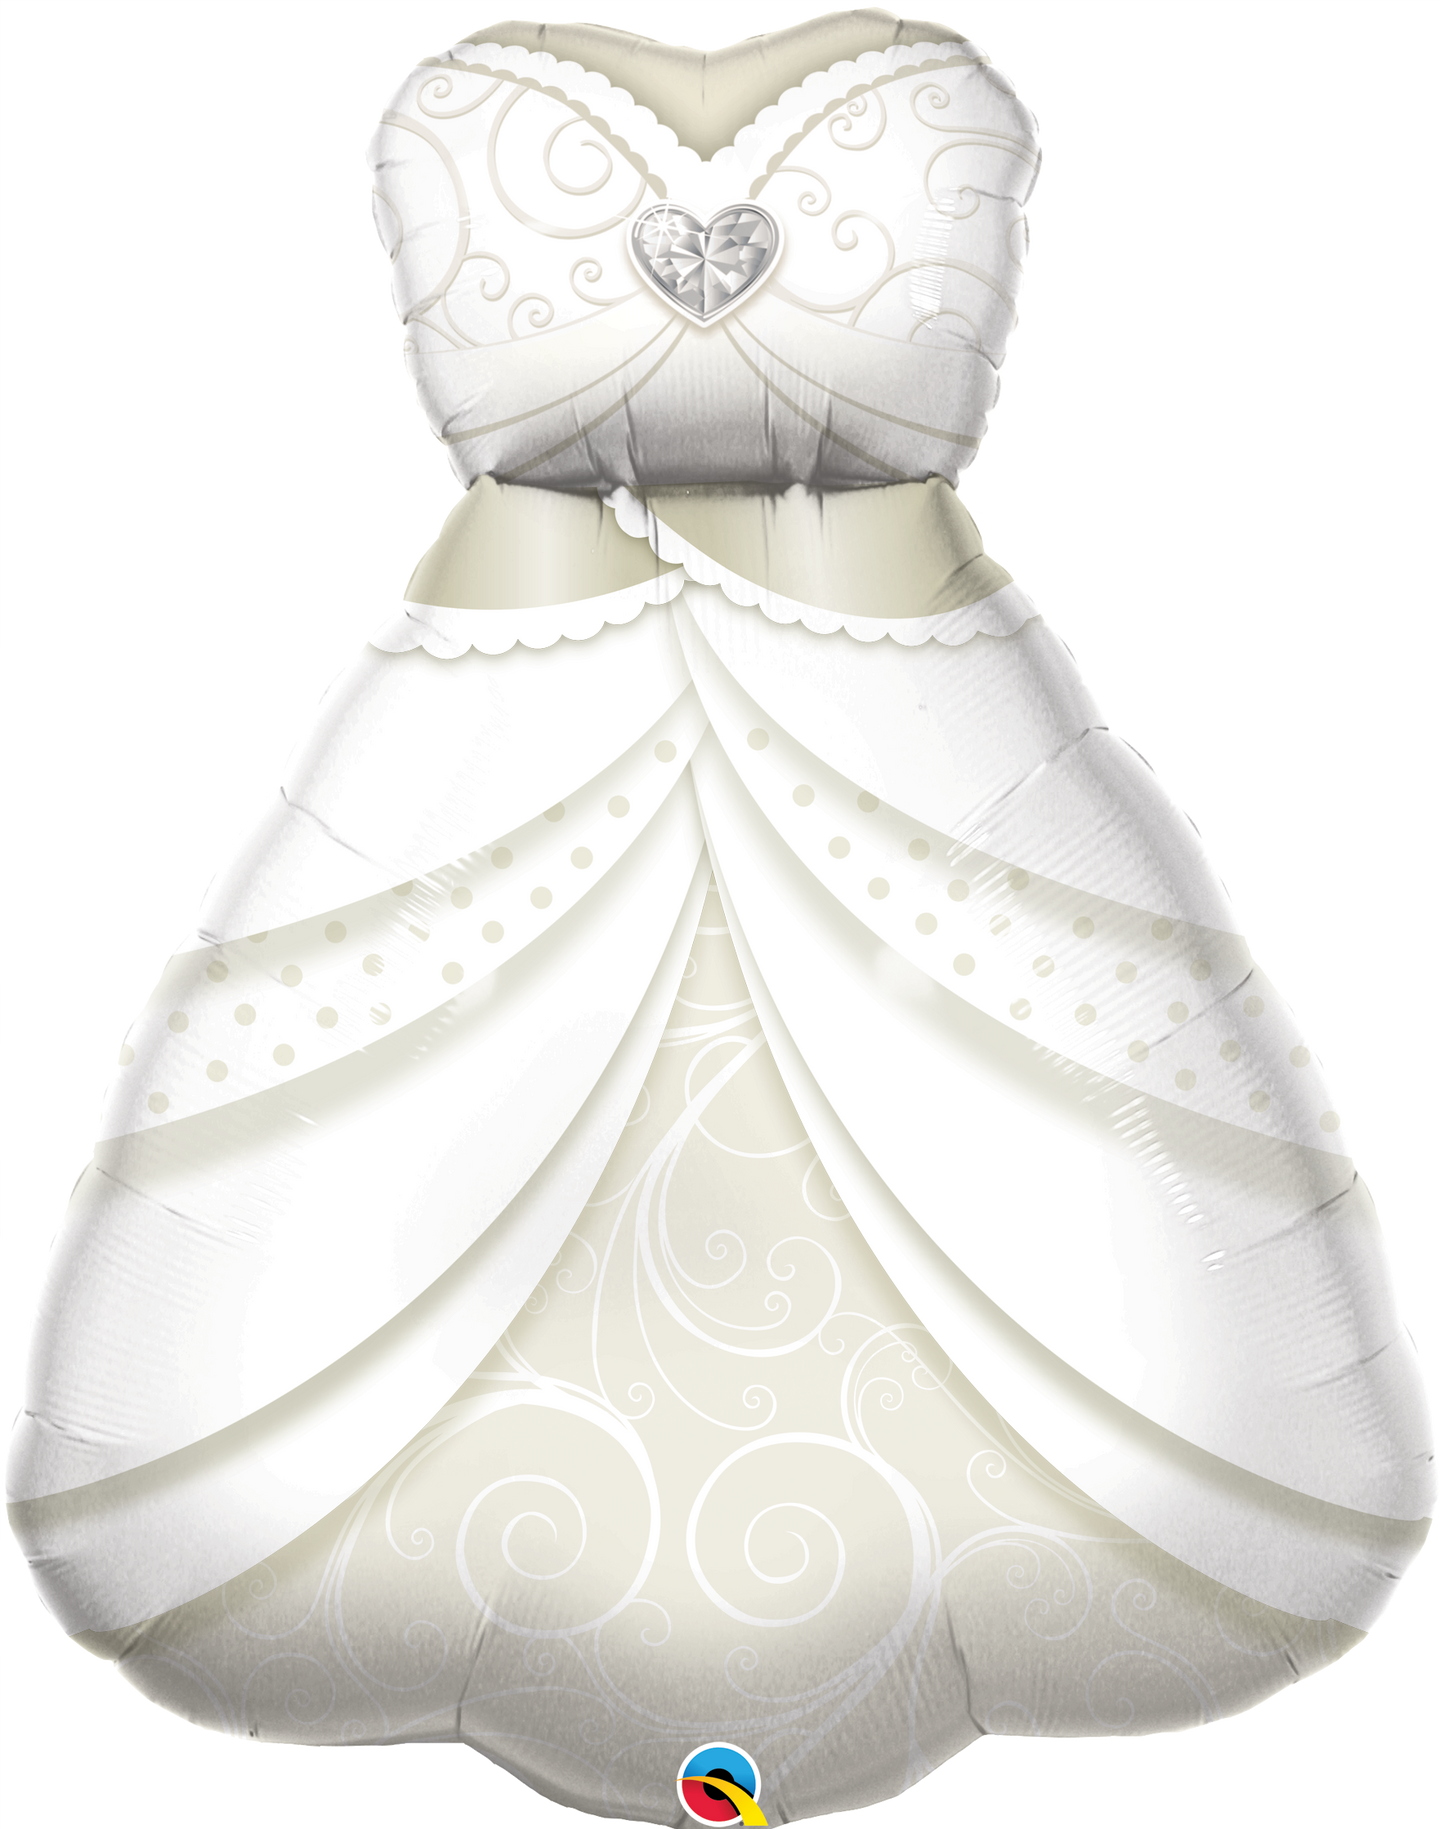 Bride's Wedding Dress